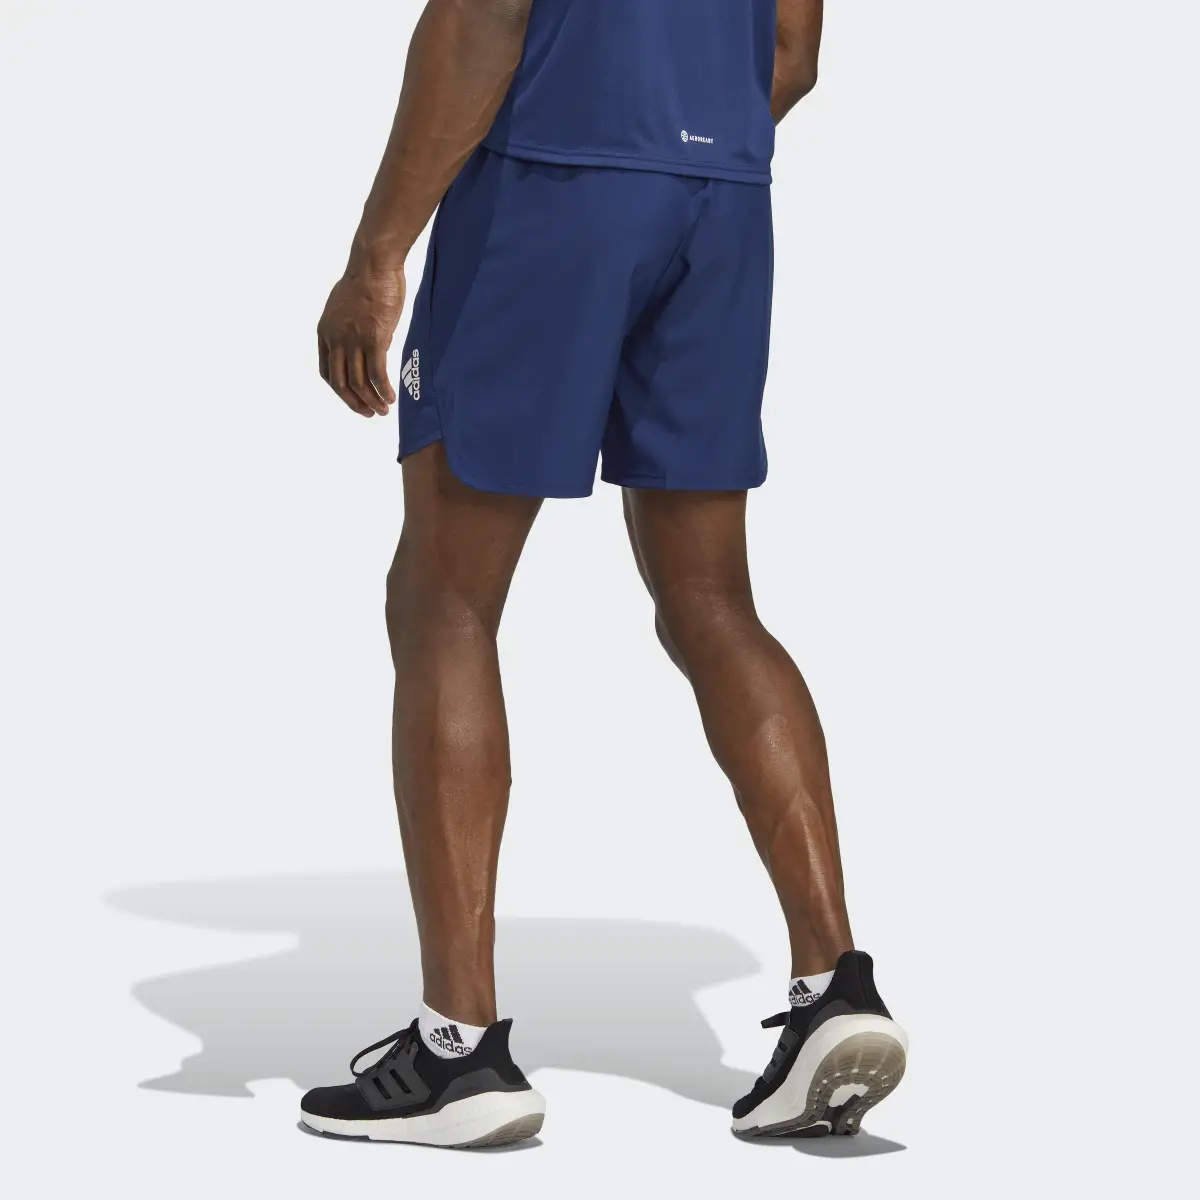 Adidas AEROREADY Designed for Movement Shorts. 2